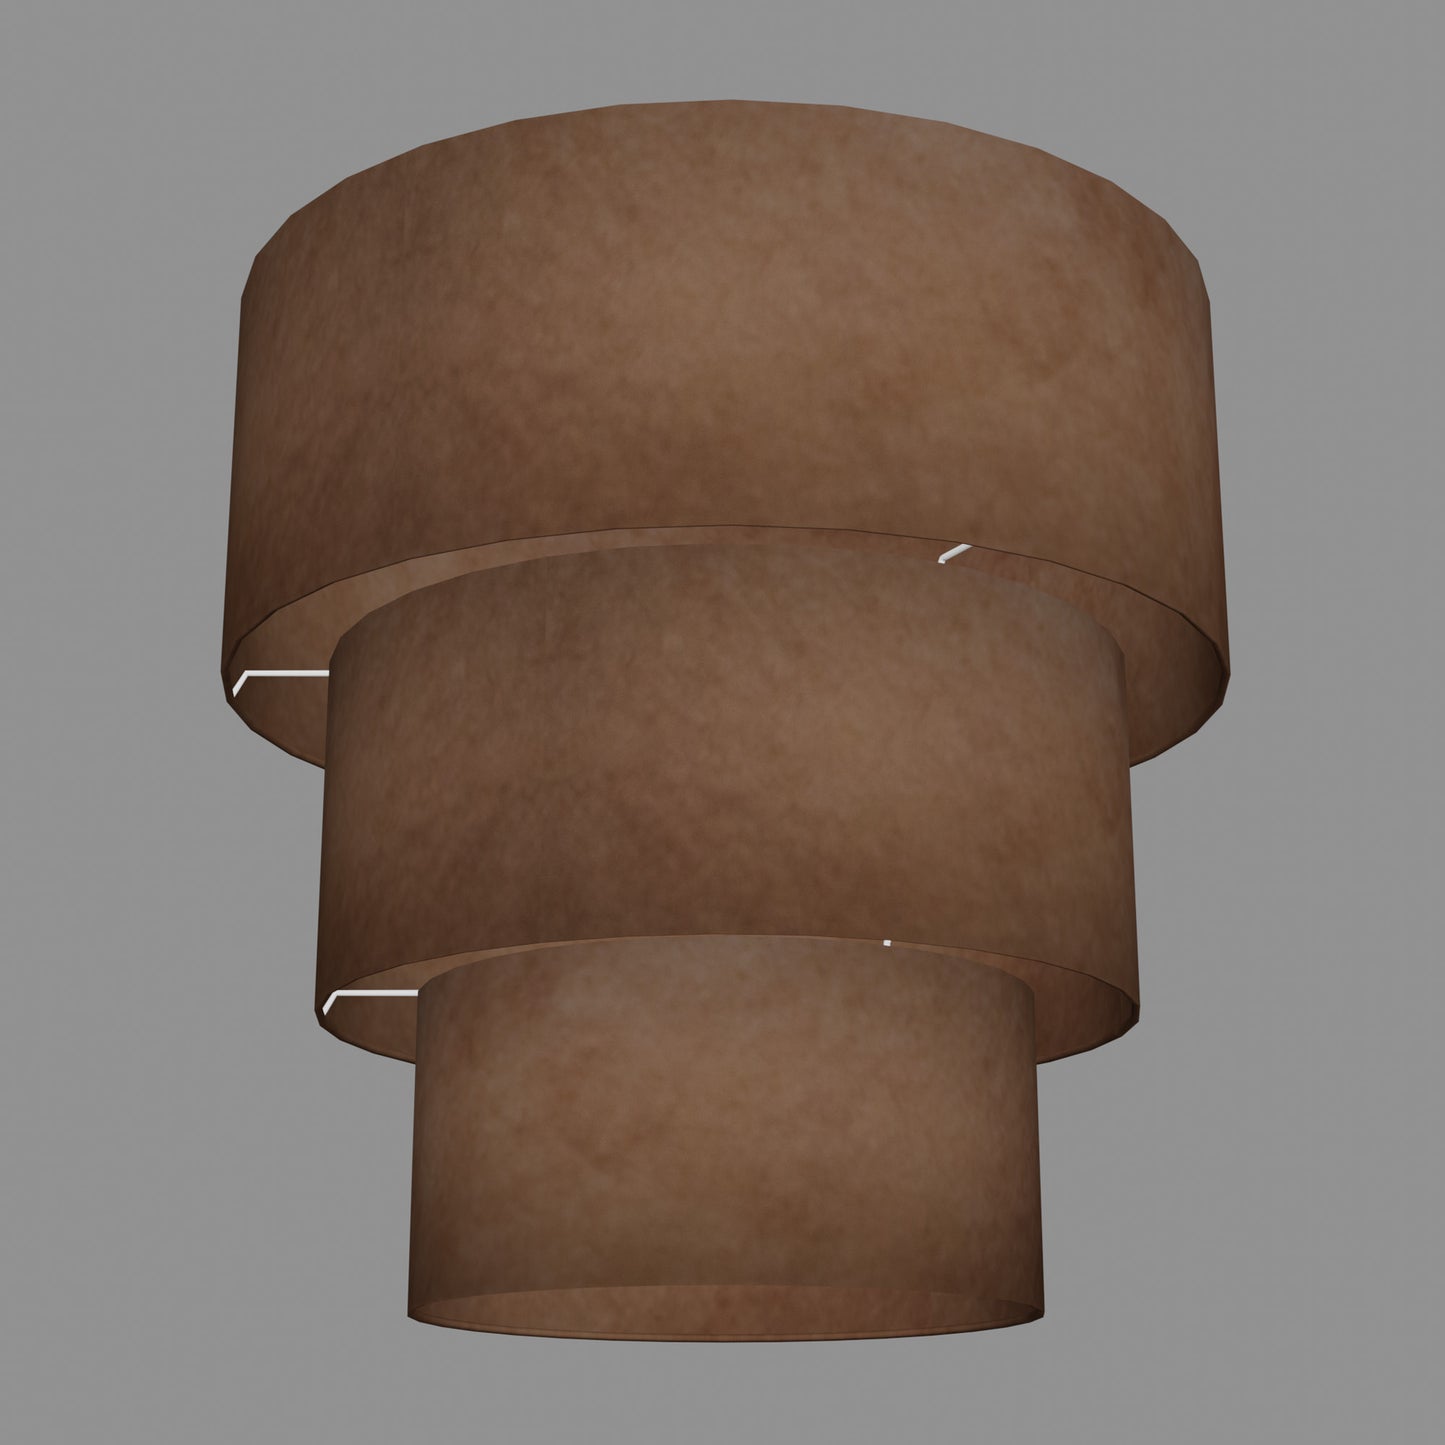 3 Tier Lamp Shade - P58 - Brown Lokta, 50cm x 20cm, 40cm x 17.5cm & 30cm x 15cm